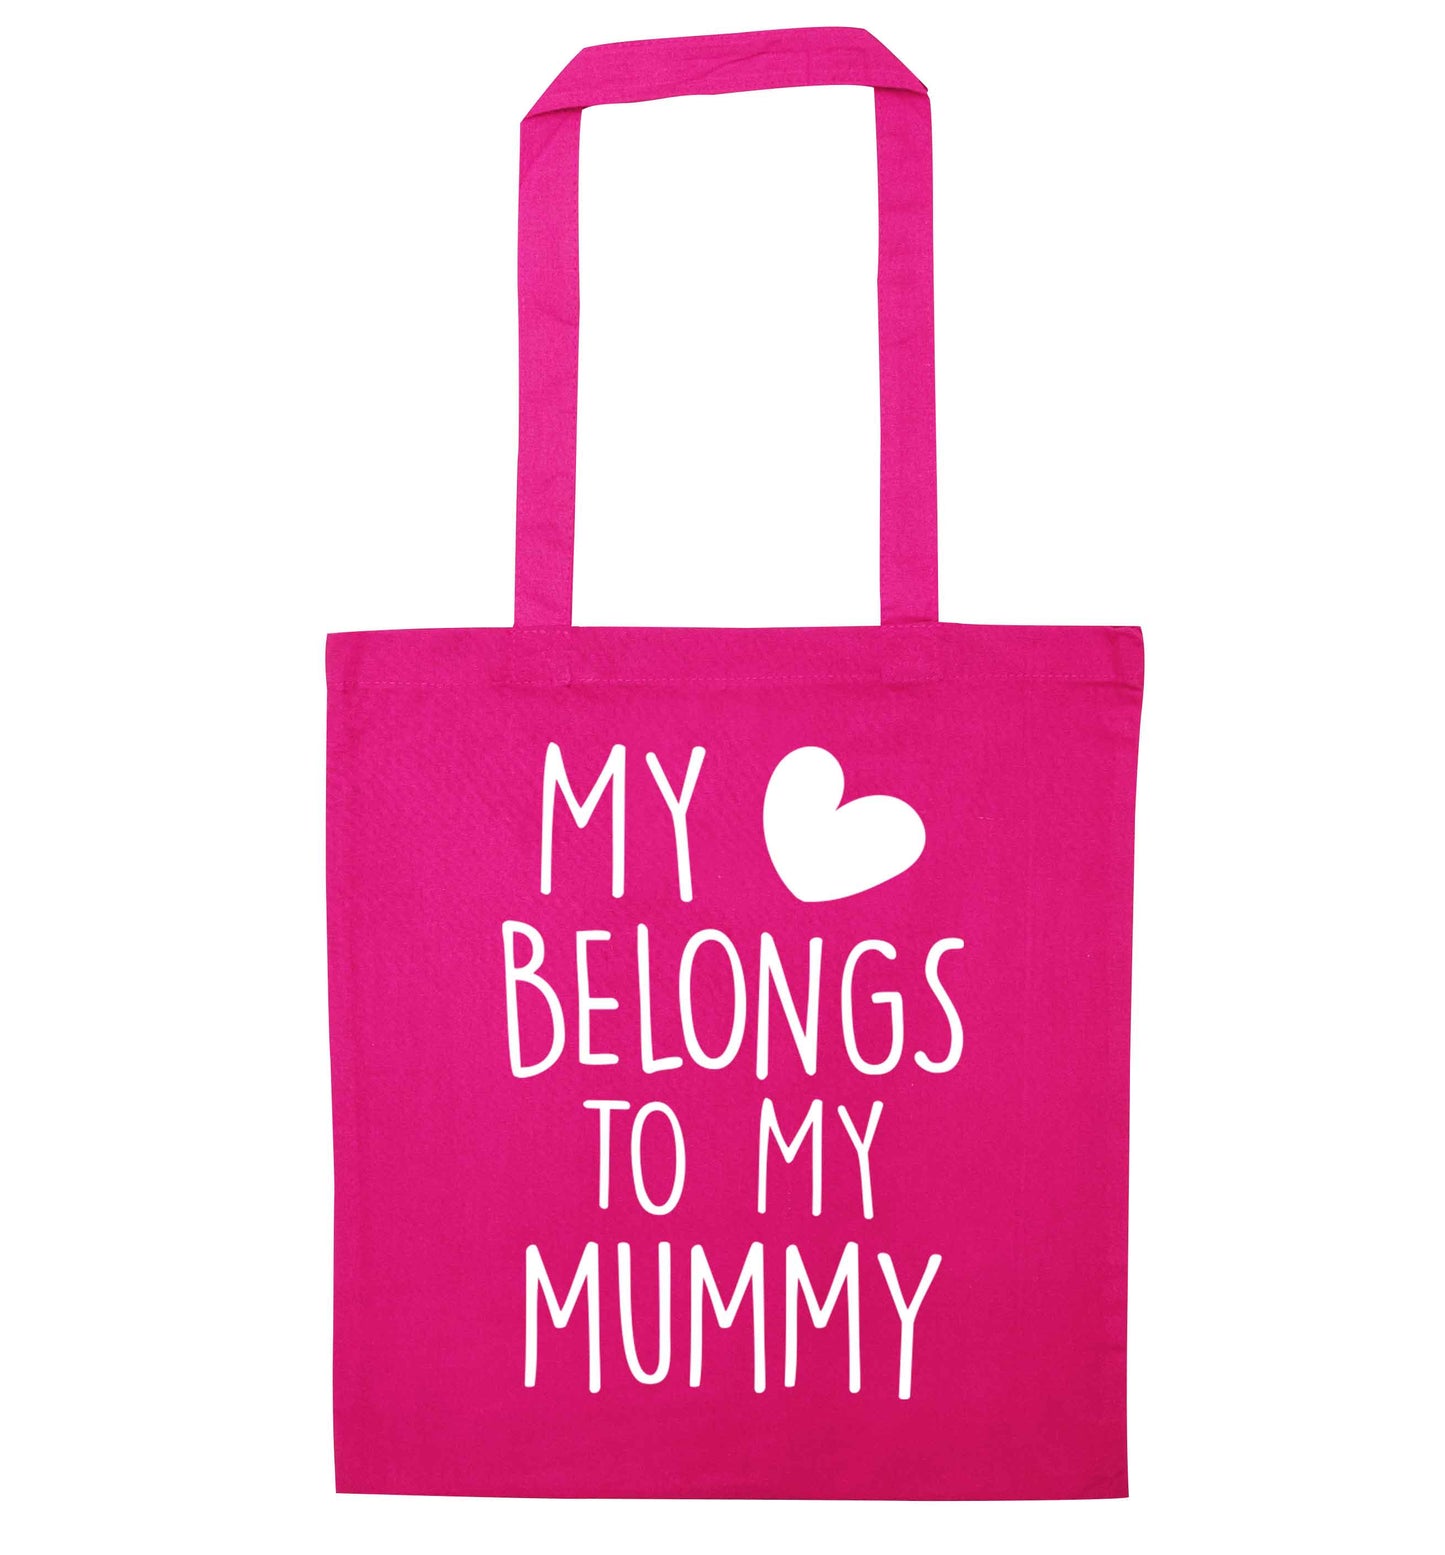 My heart belongs to my mummy pink tote bag